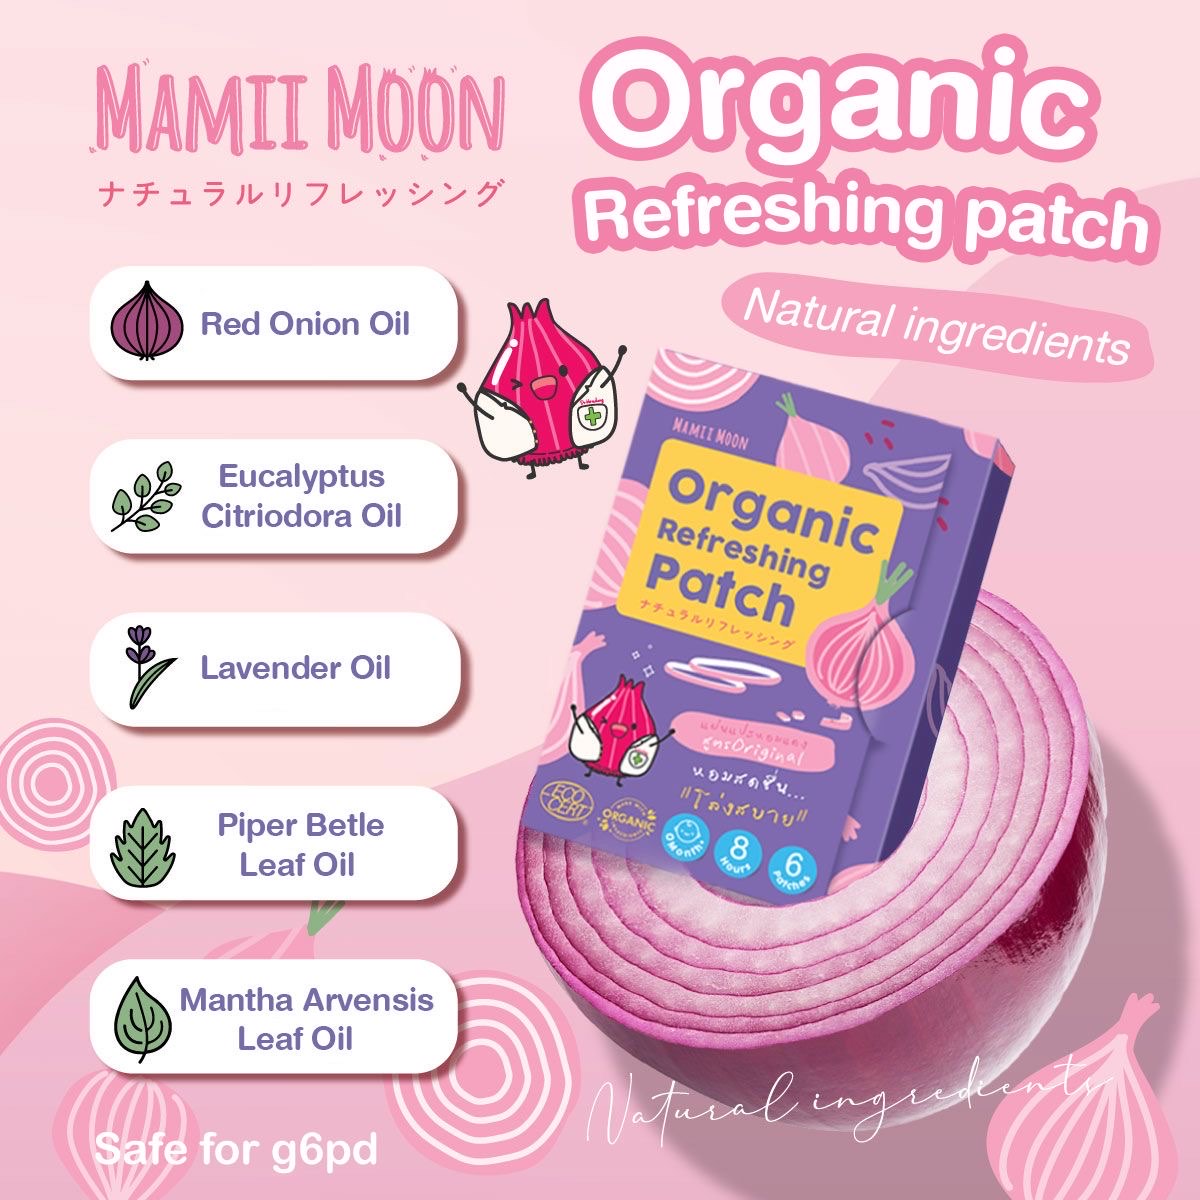 Mamii Moon Organic Refreshing Patch